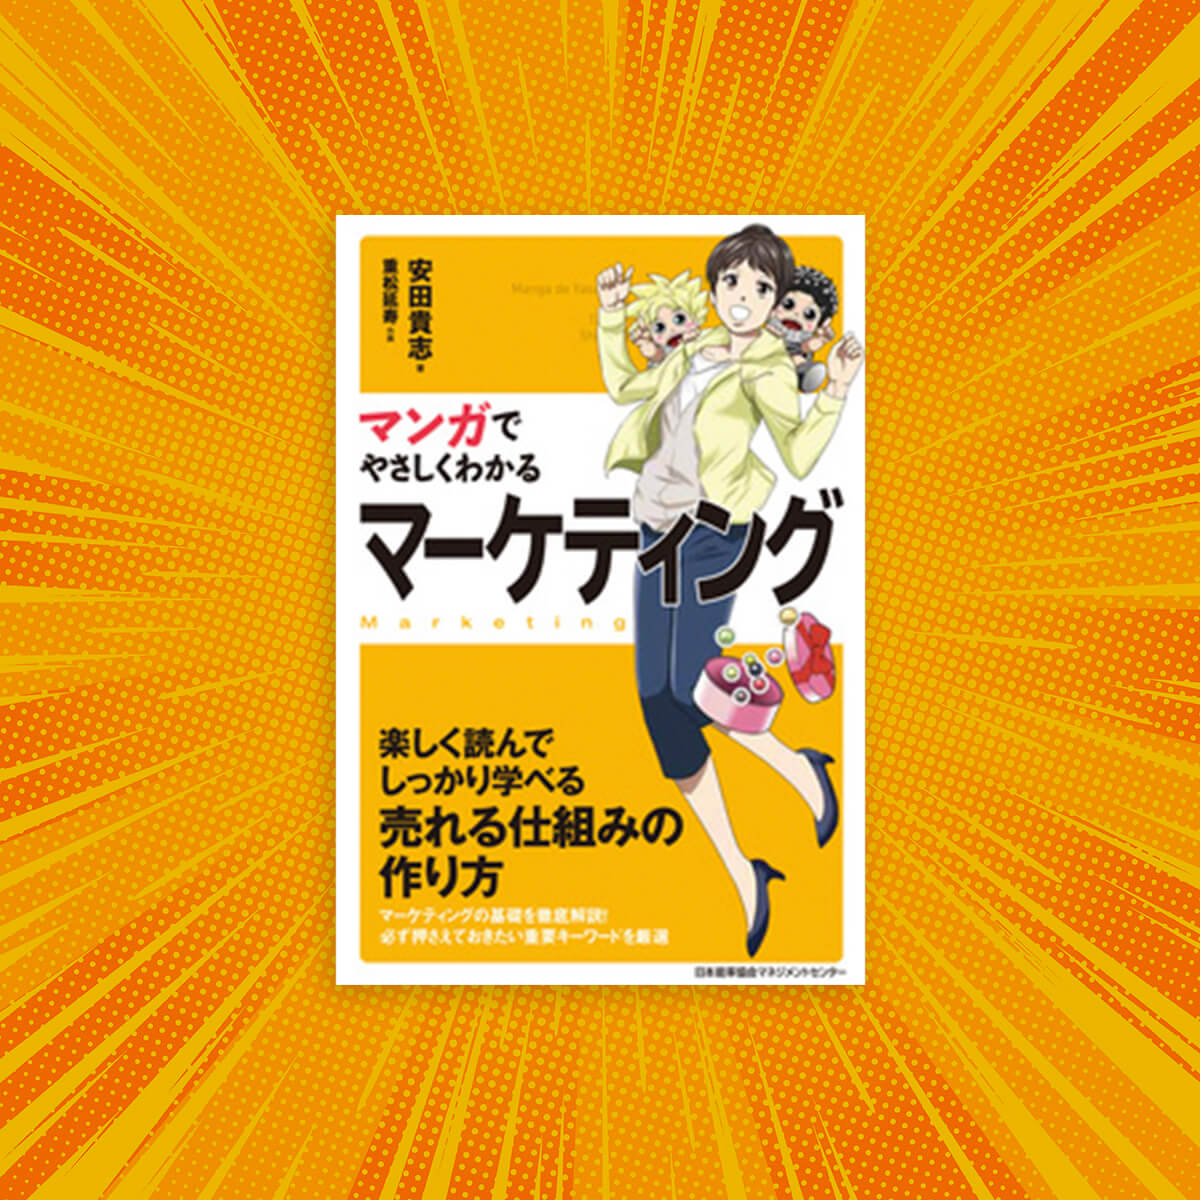 Easy reading through Manga | Marketing